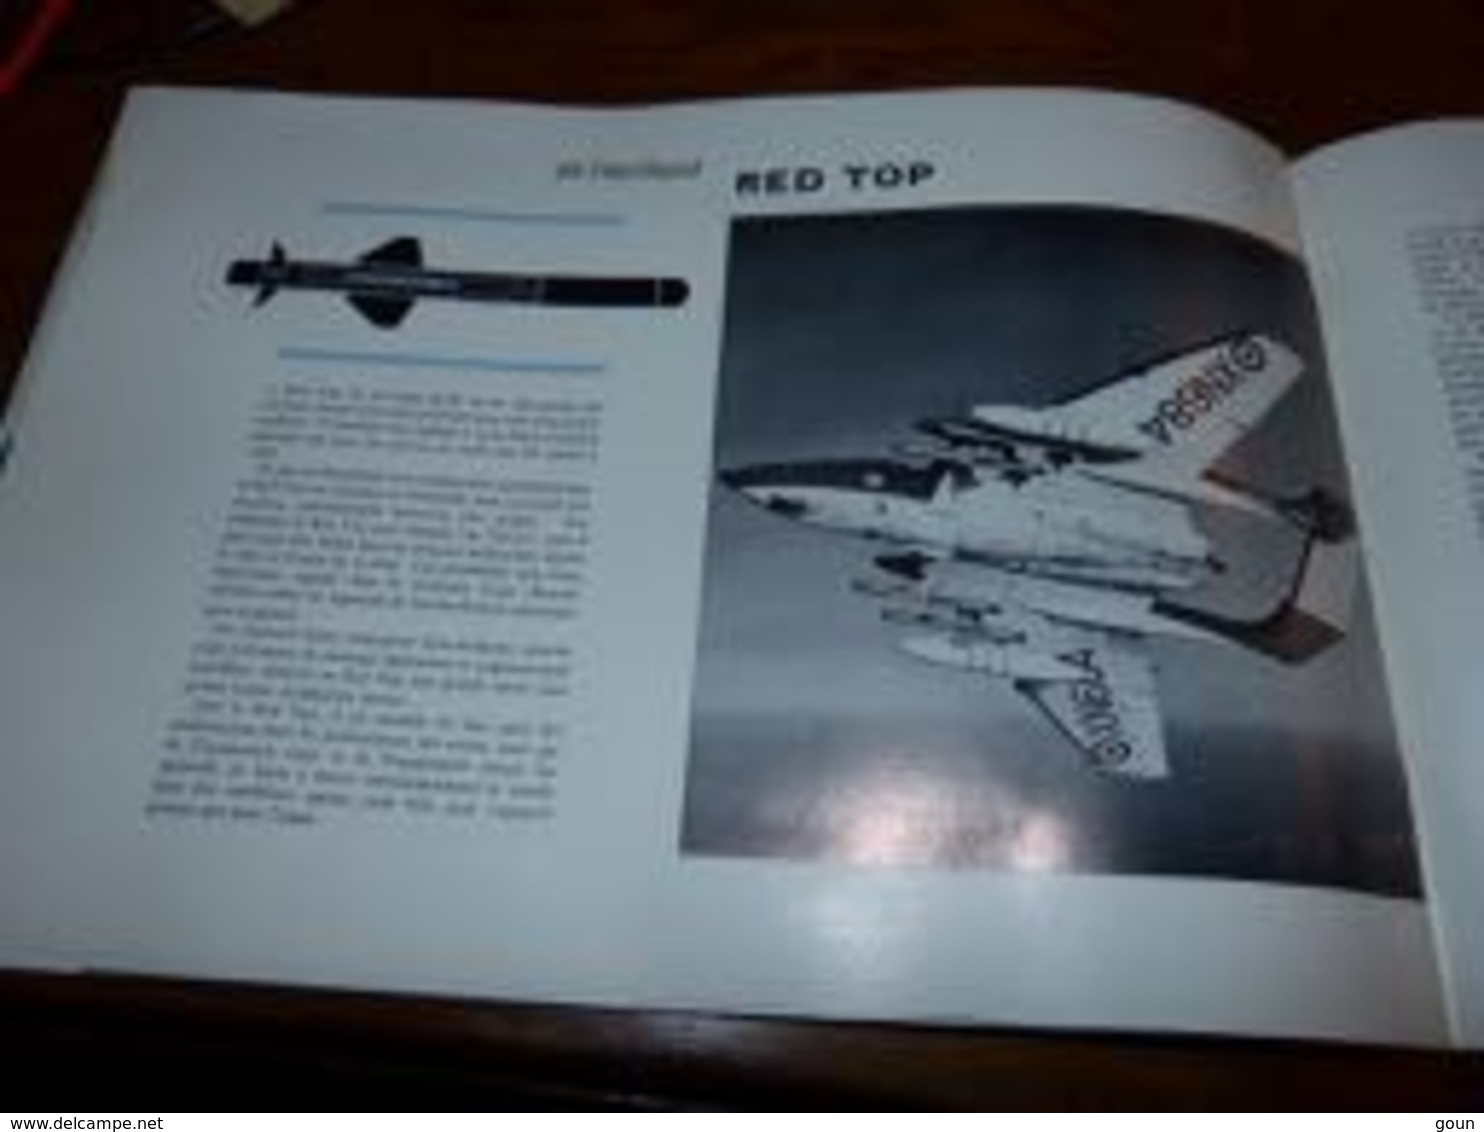 Document présentation Hawker Siddeley aviation  militaire Buccaneer P.1127 Vulcan Red Top etc etc